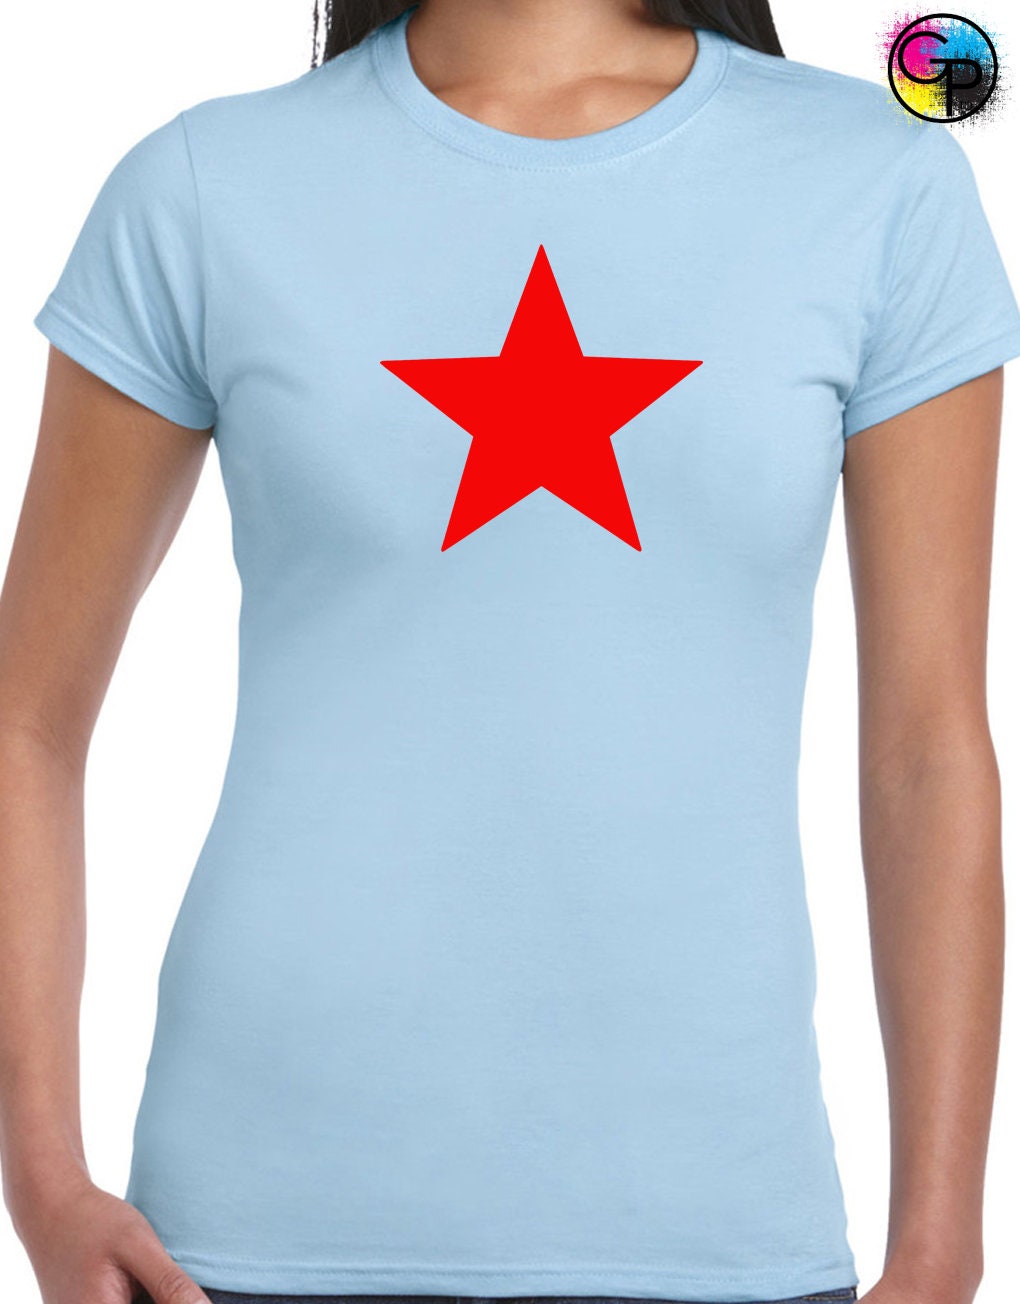 Barry Chuckle T-Shirt Che Guevara Style